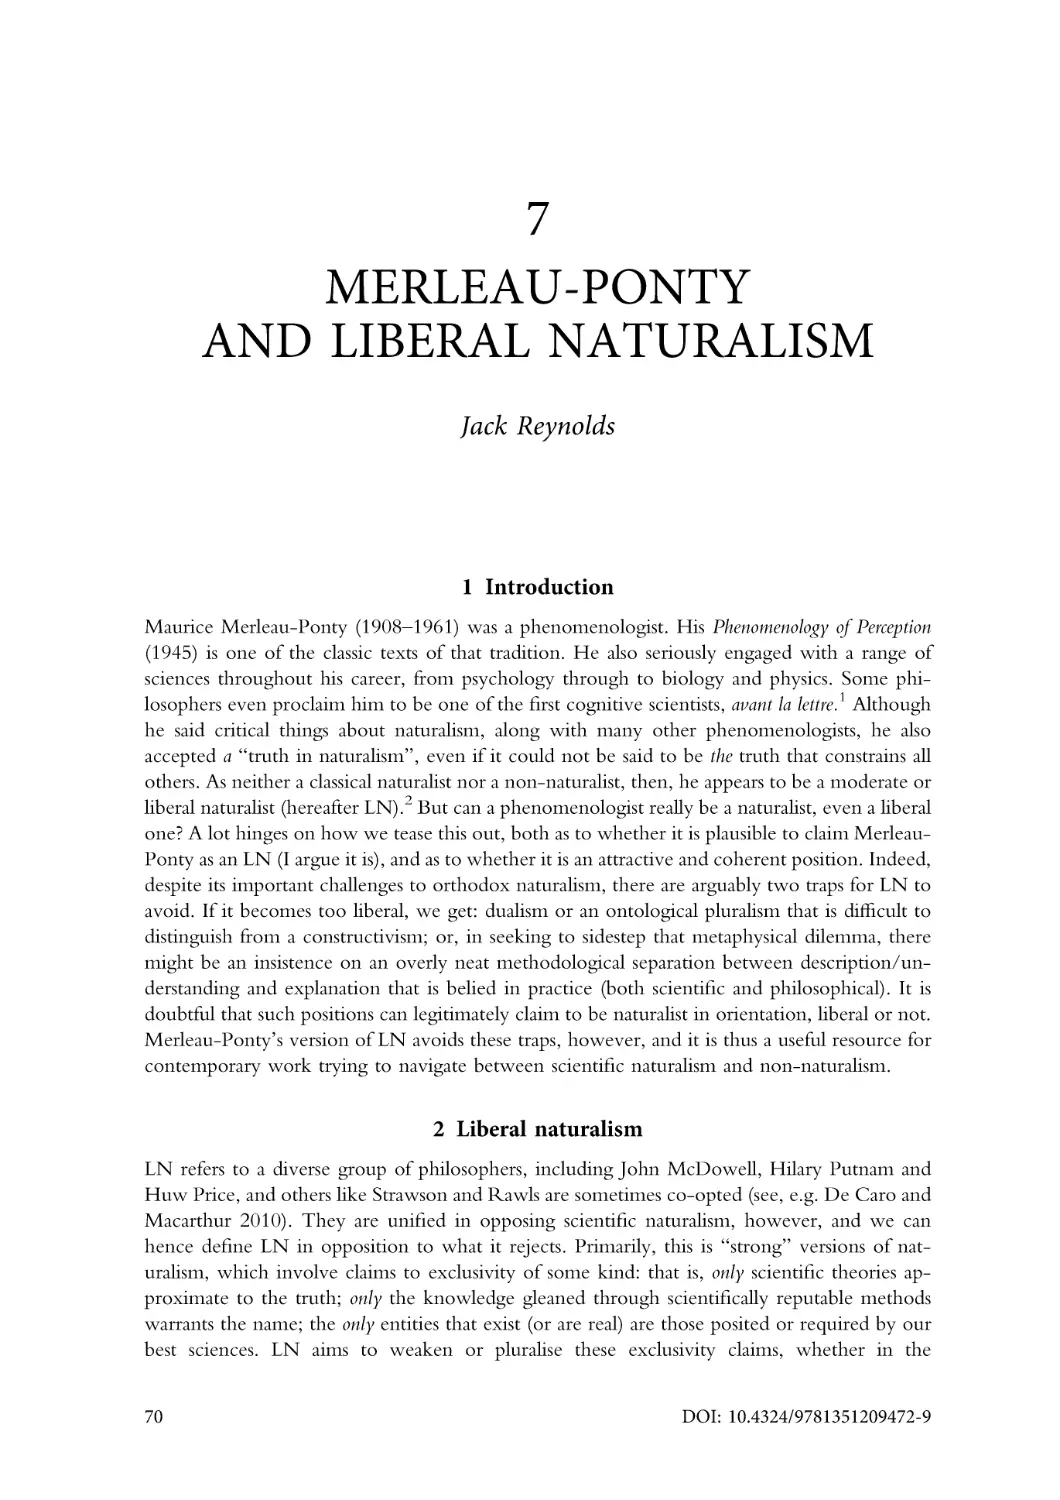 7. Merleau-Ponty and liberal naturalism
1. Introduction
2. Liberal naturalism